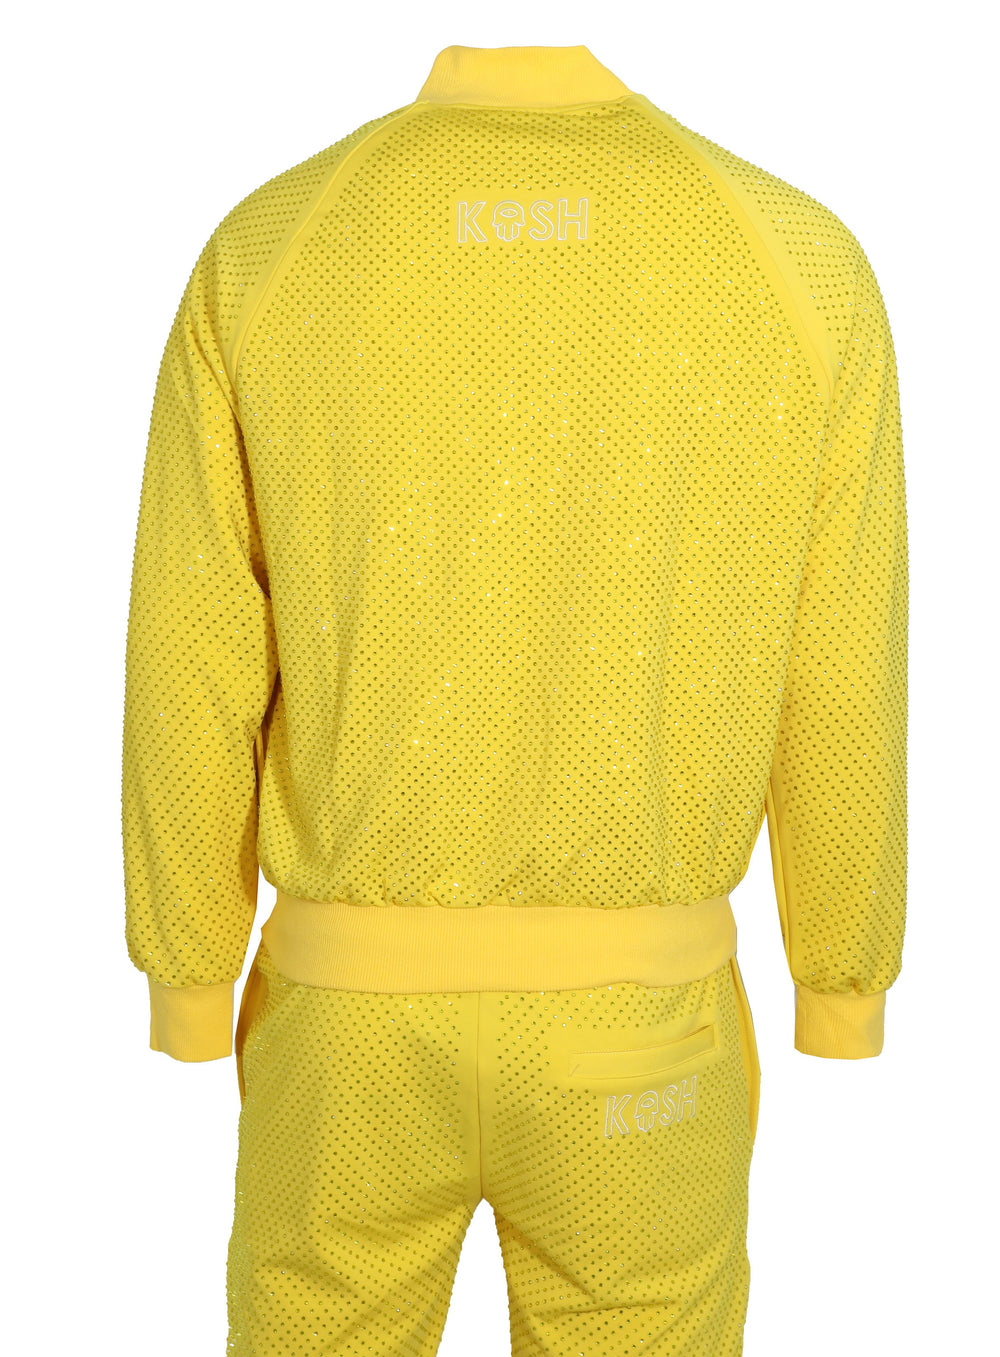 Kash All Over Diamond Track Jacket- Yellow